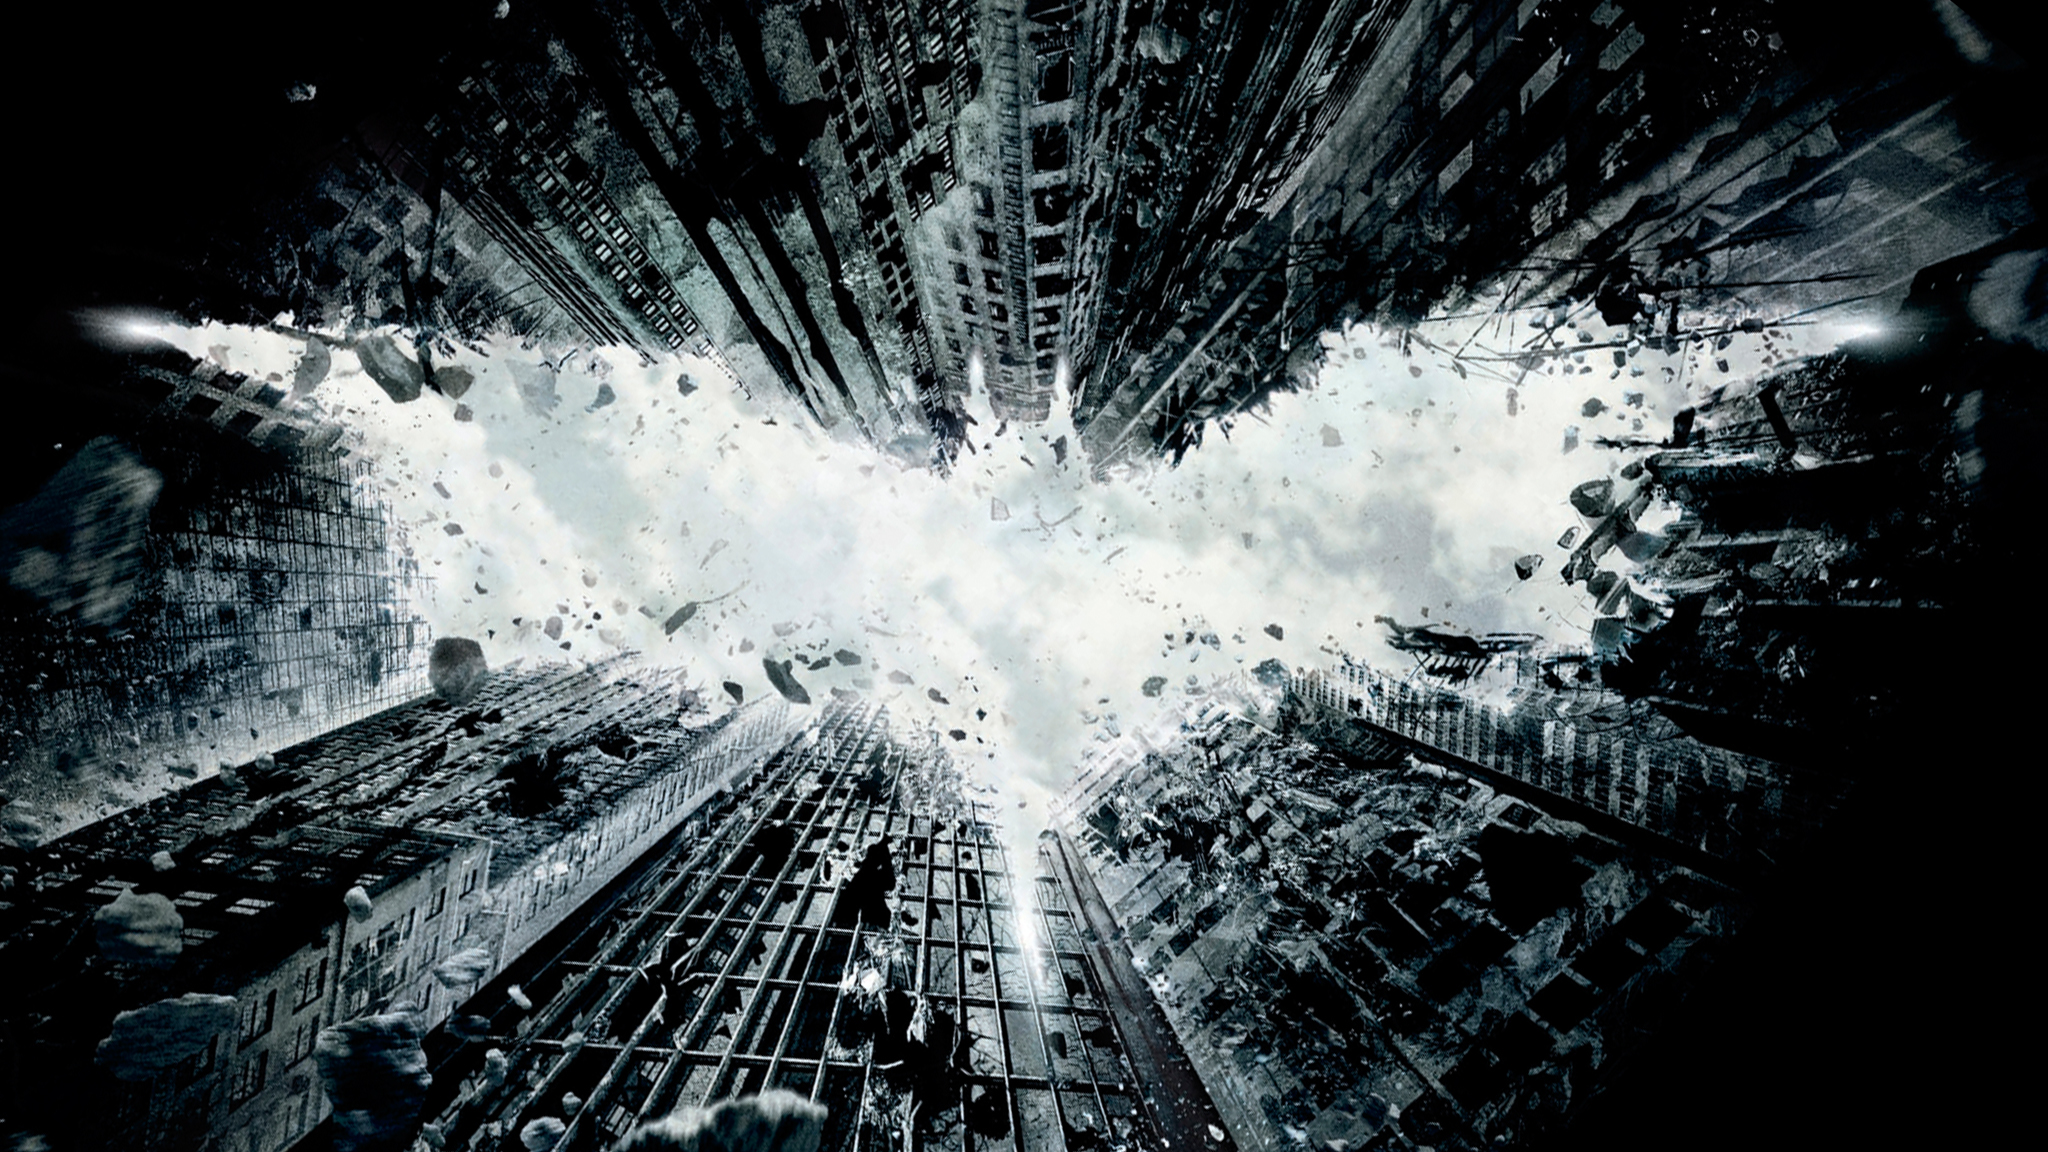 Wallpaper Batman Gotham City   Rincon Util